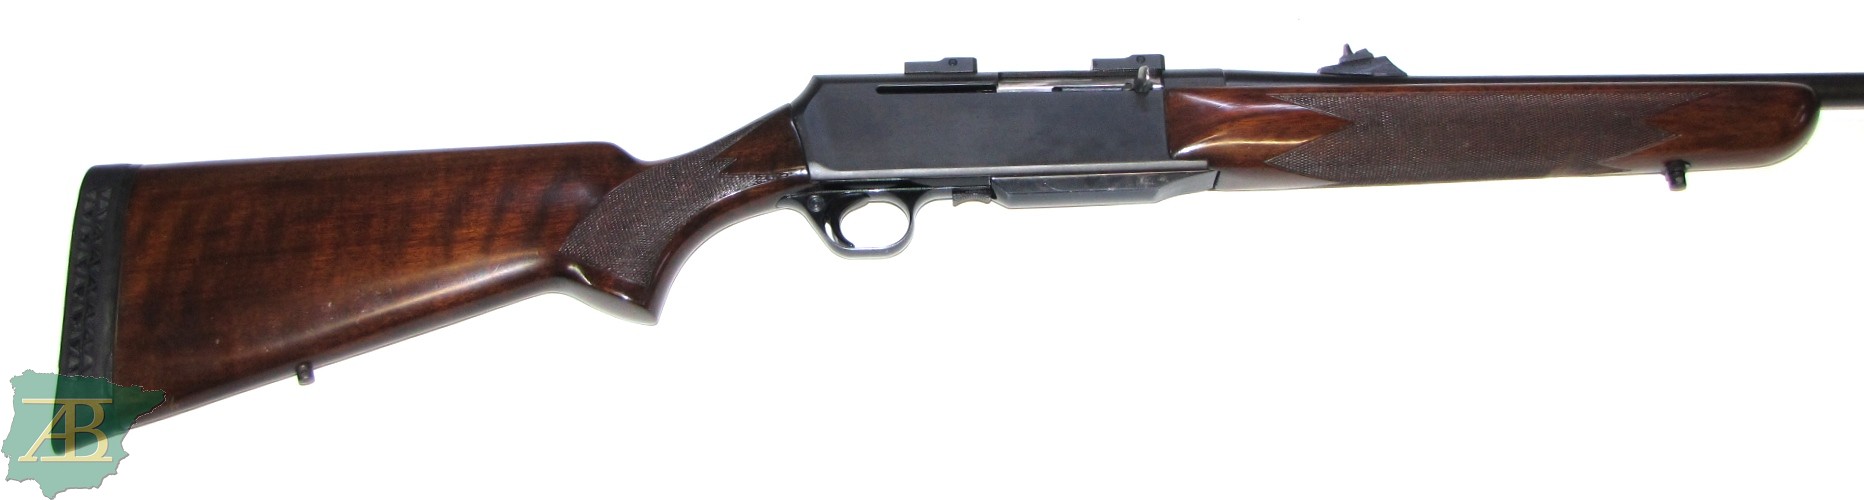 Rifle semiautomático de caza BROWNING BAR Ref 7747-armeriaiberica-2